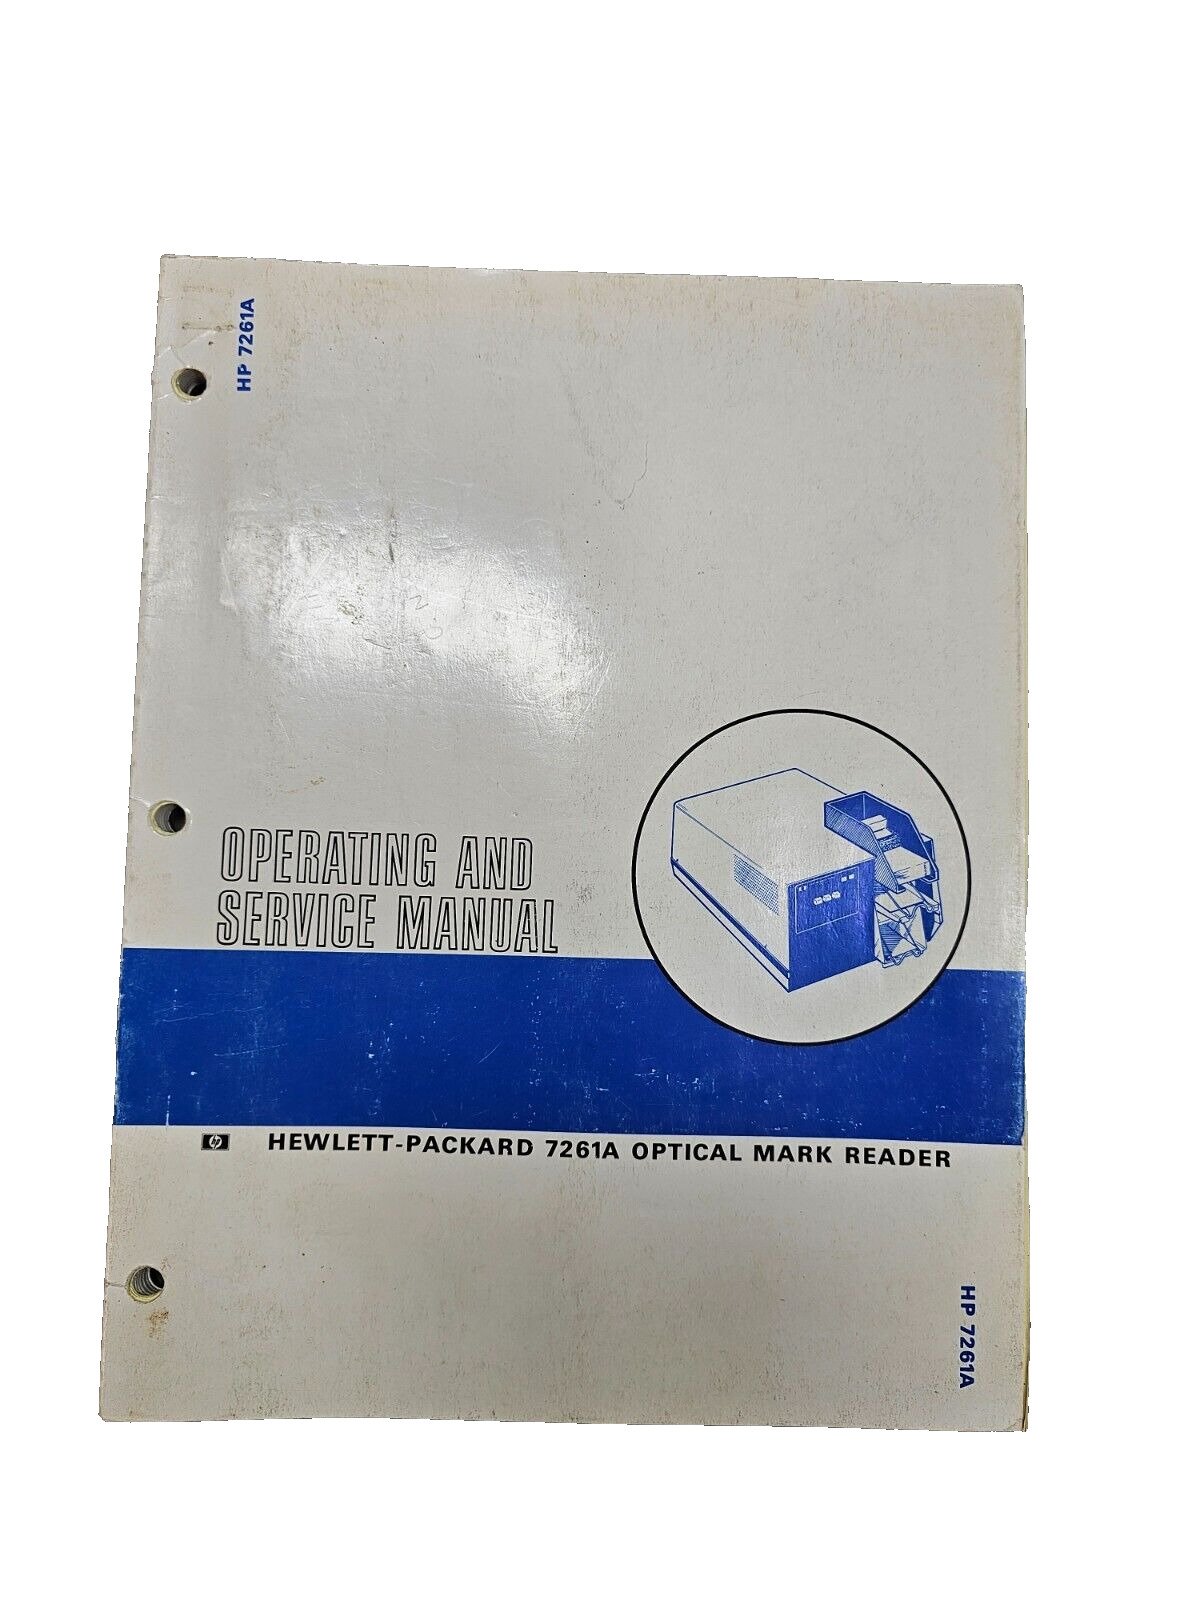 Rare Vintage HP 7261A Optical Mark Reader Operating & Service Manual